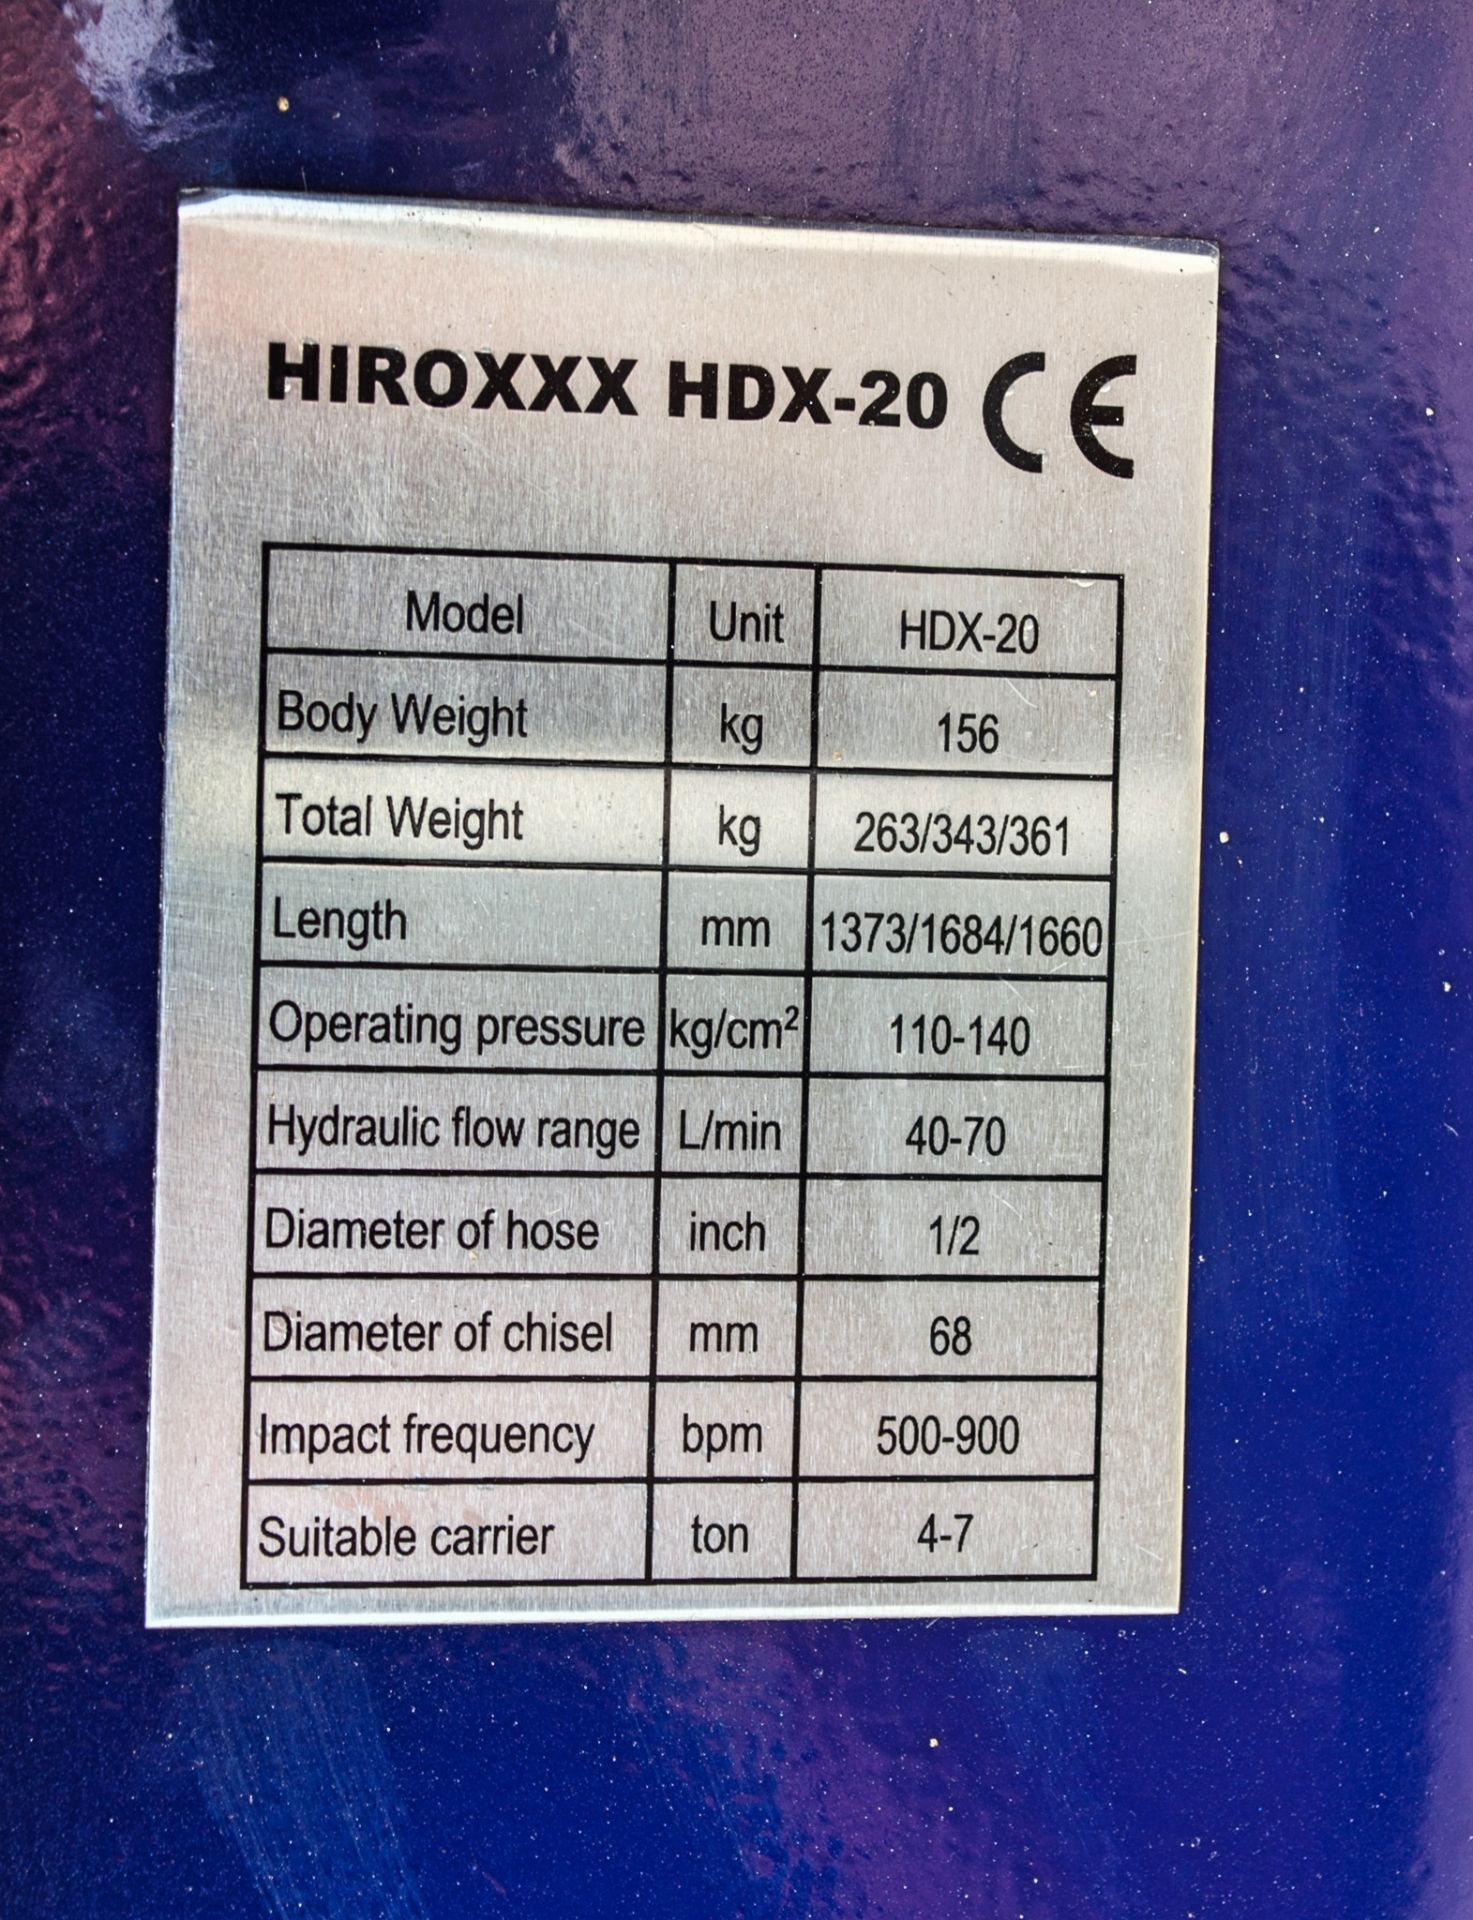 Hirox HDX20 hydraulic breaker to suit 4 to 7 tonne excavator New & Unused - Image 4 of 4